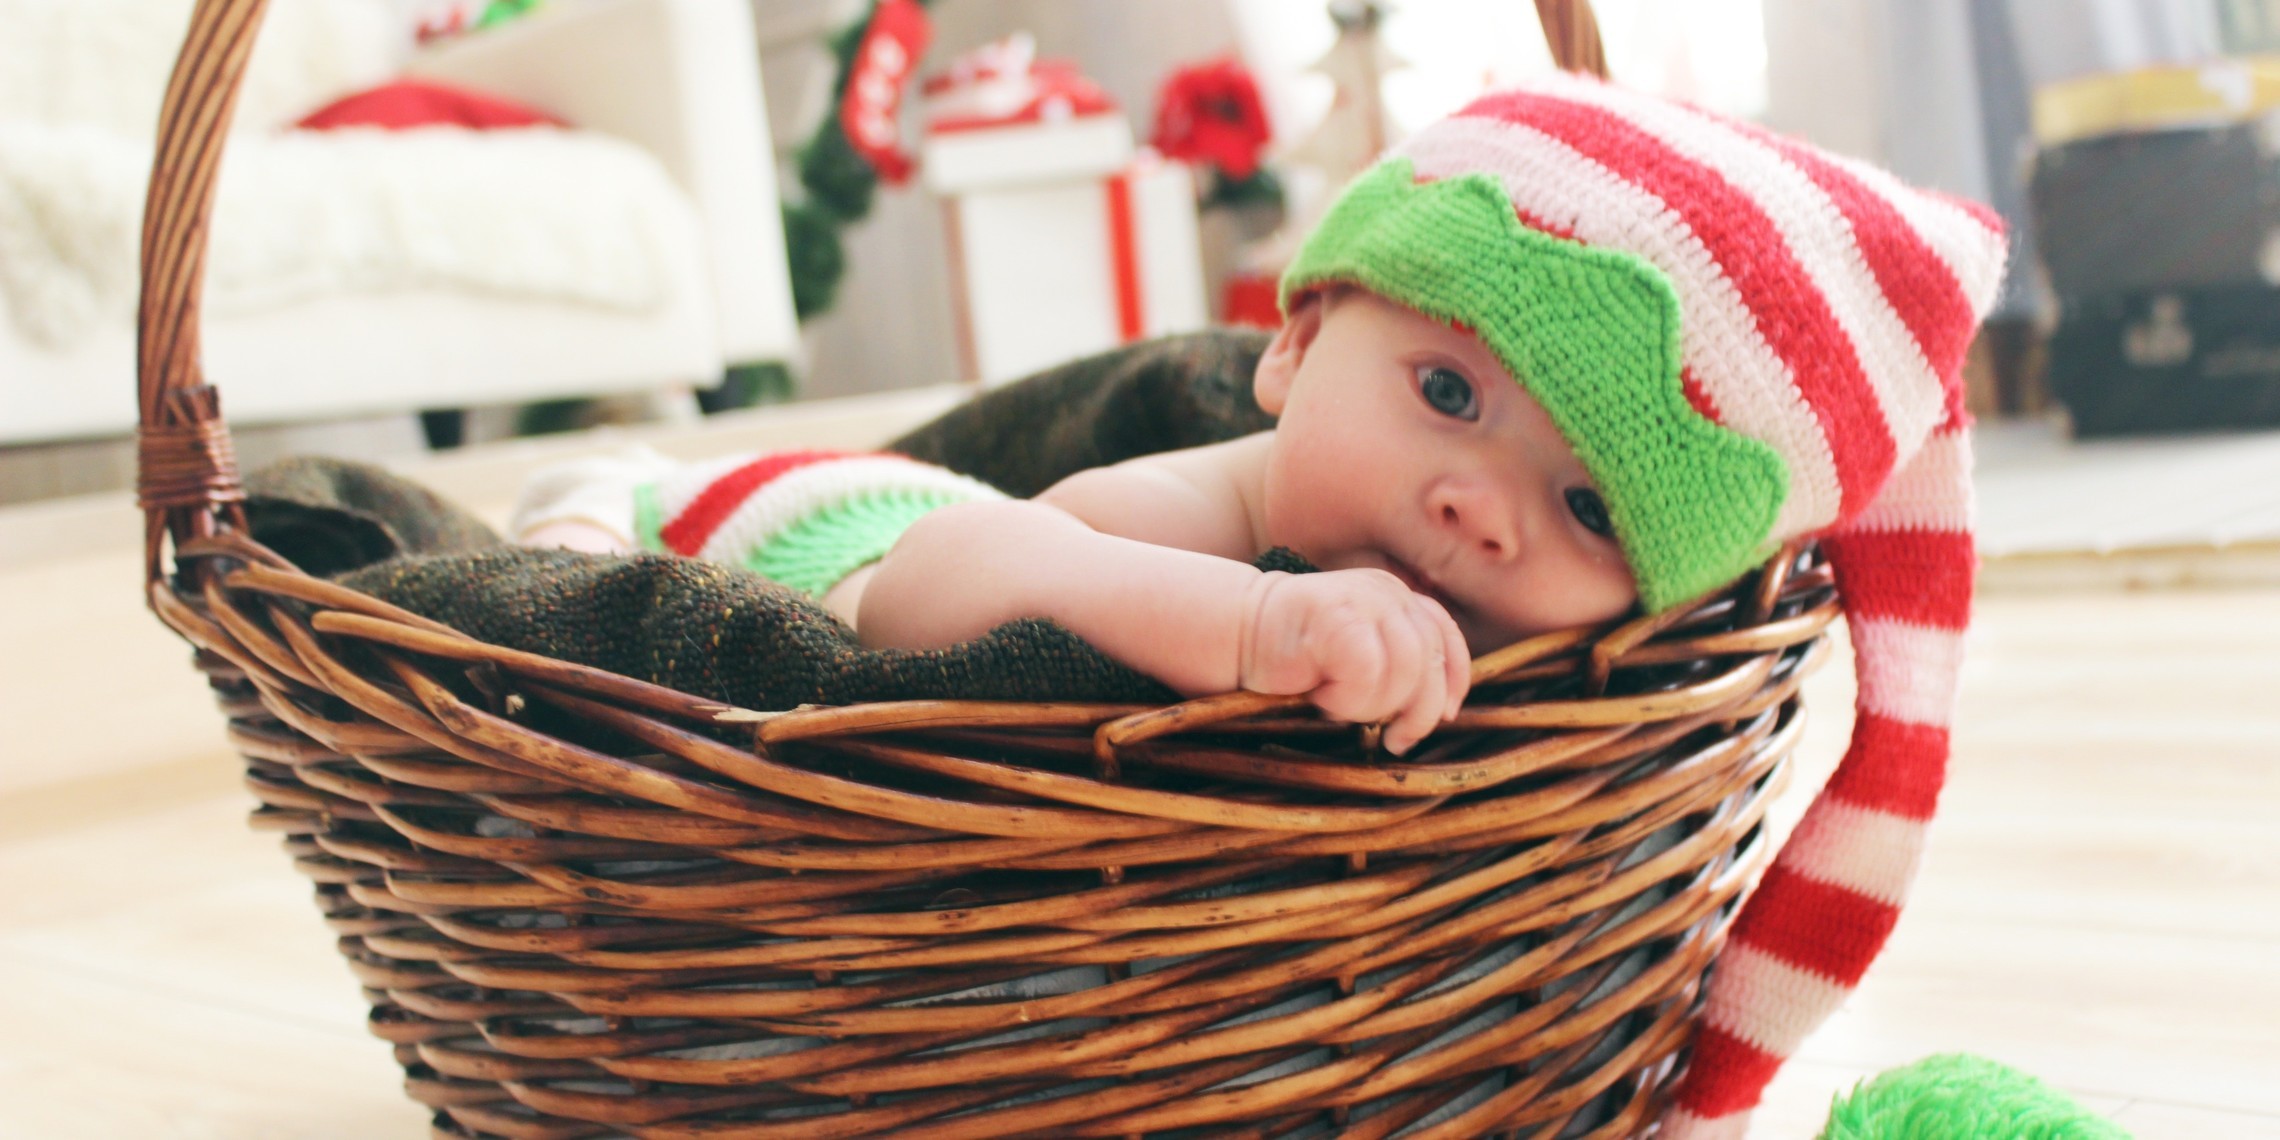 Adorable Baby Basket Child 265981 1